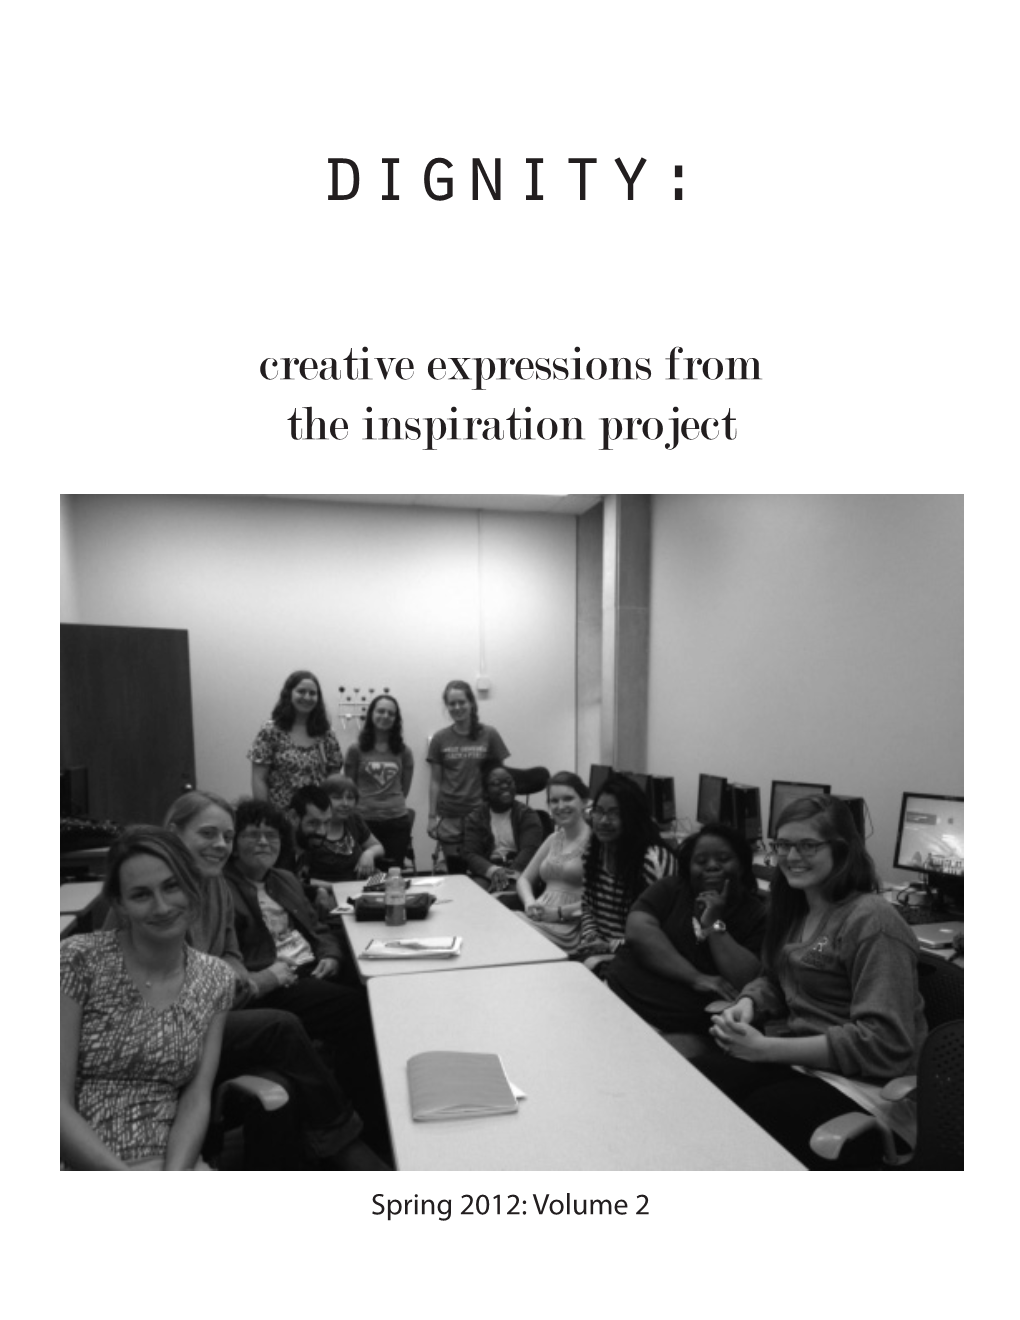 Dignity, Spring 2012, Volume 2